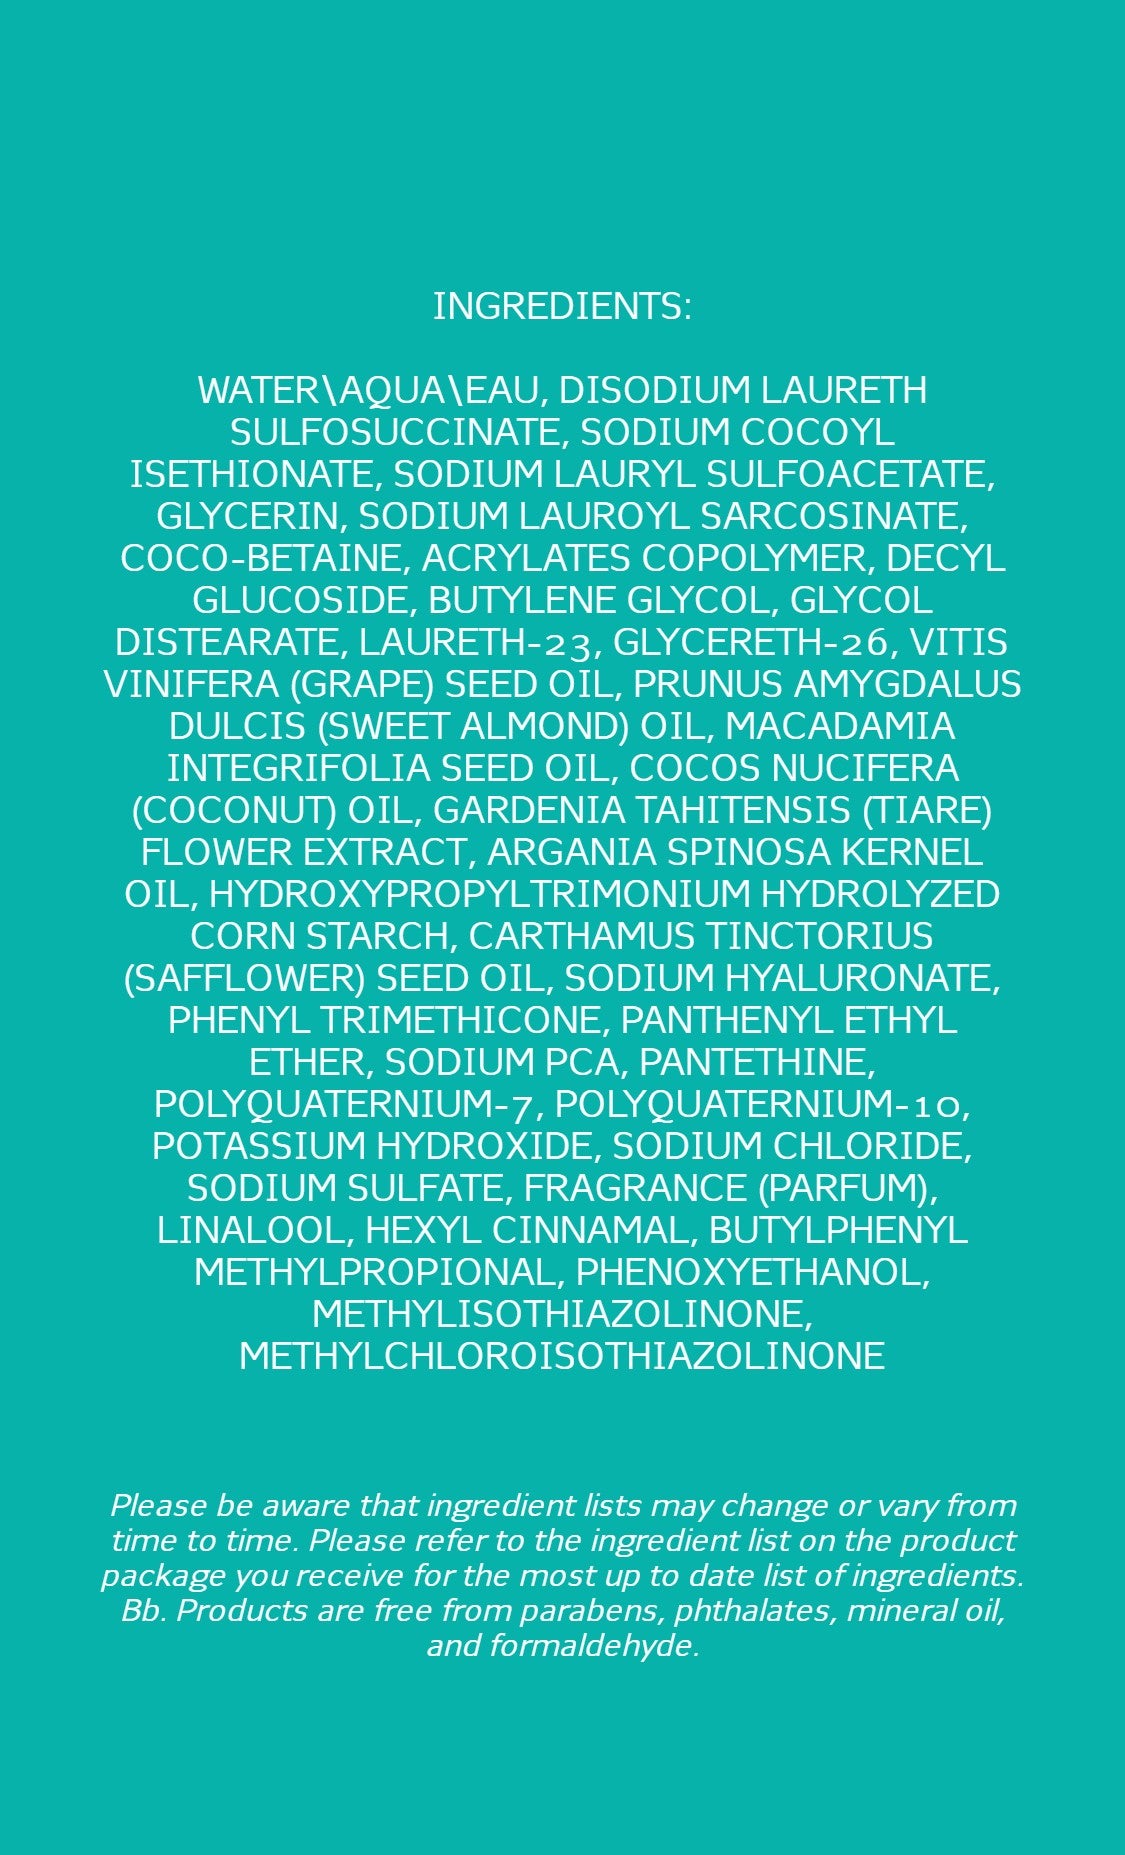 HIO shampoo ingredient list